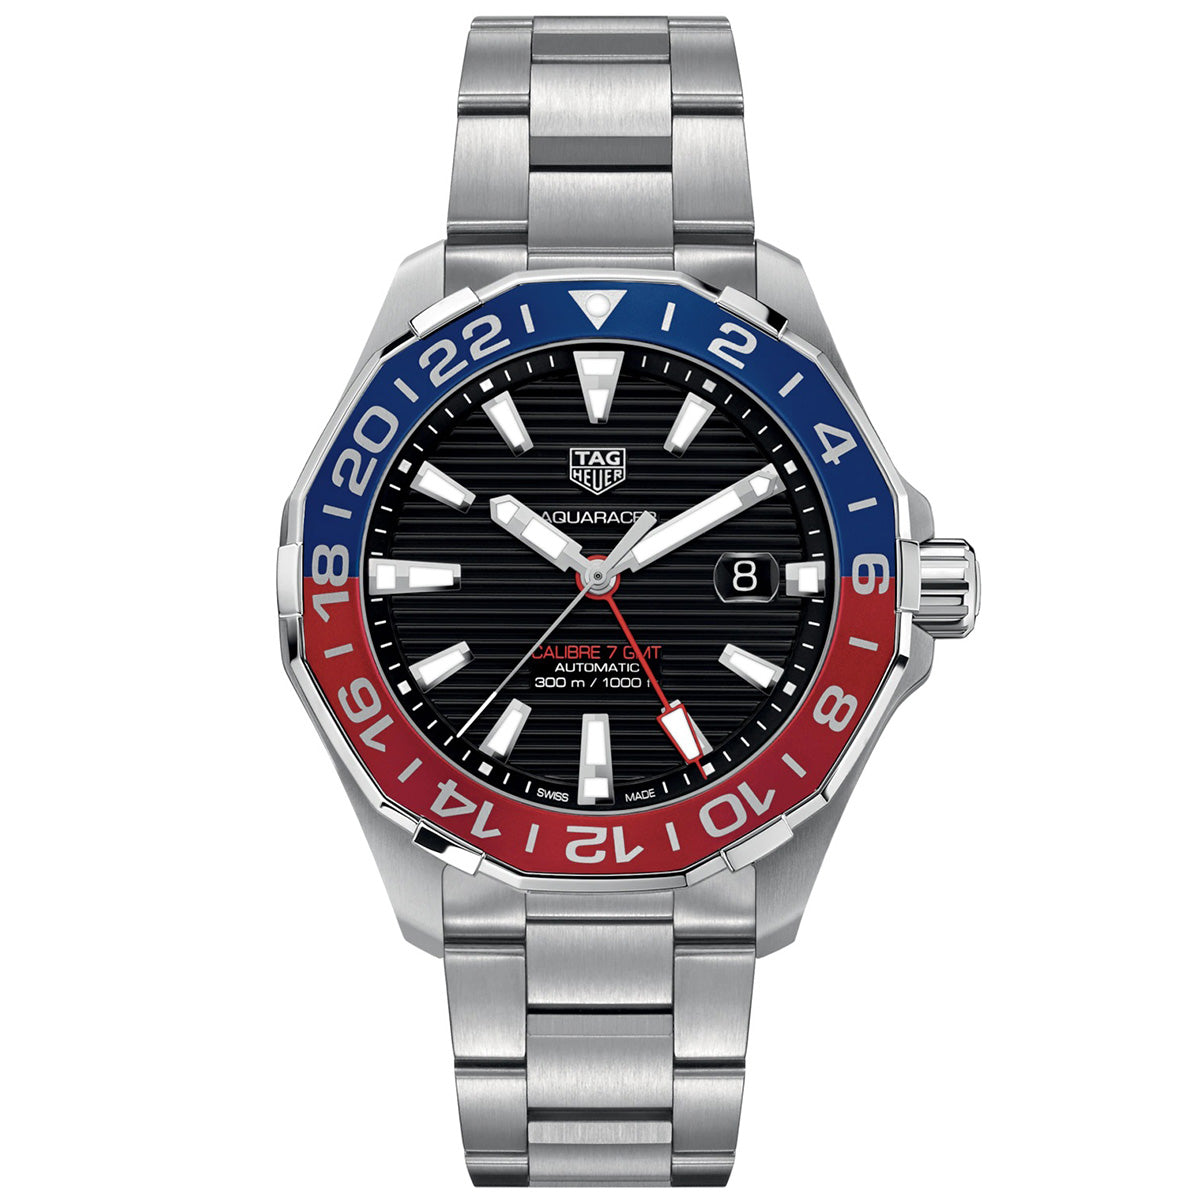 TAG Heuer Aquaracer GMT Blue and Red Bezel Watch WAY201 – NAGI